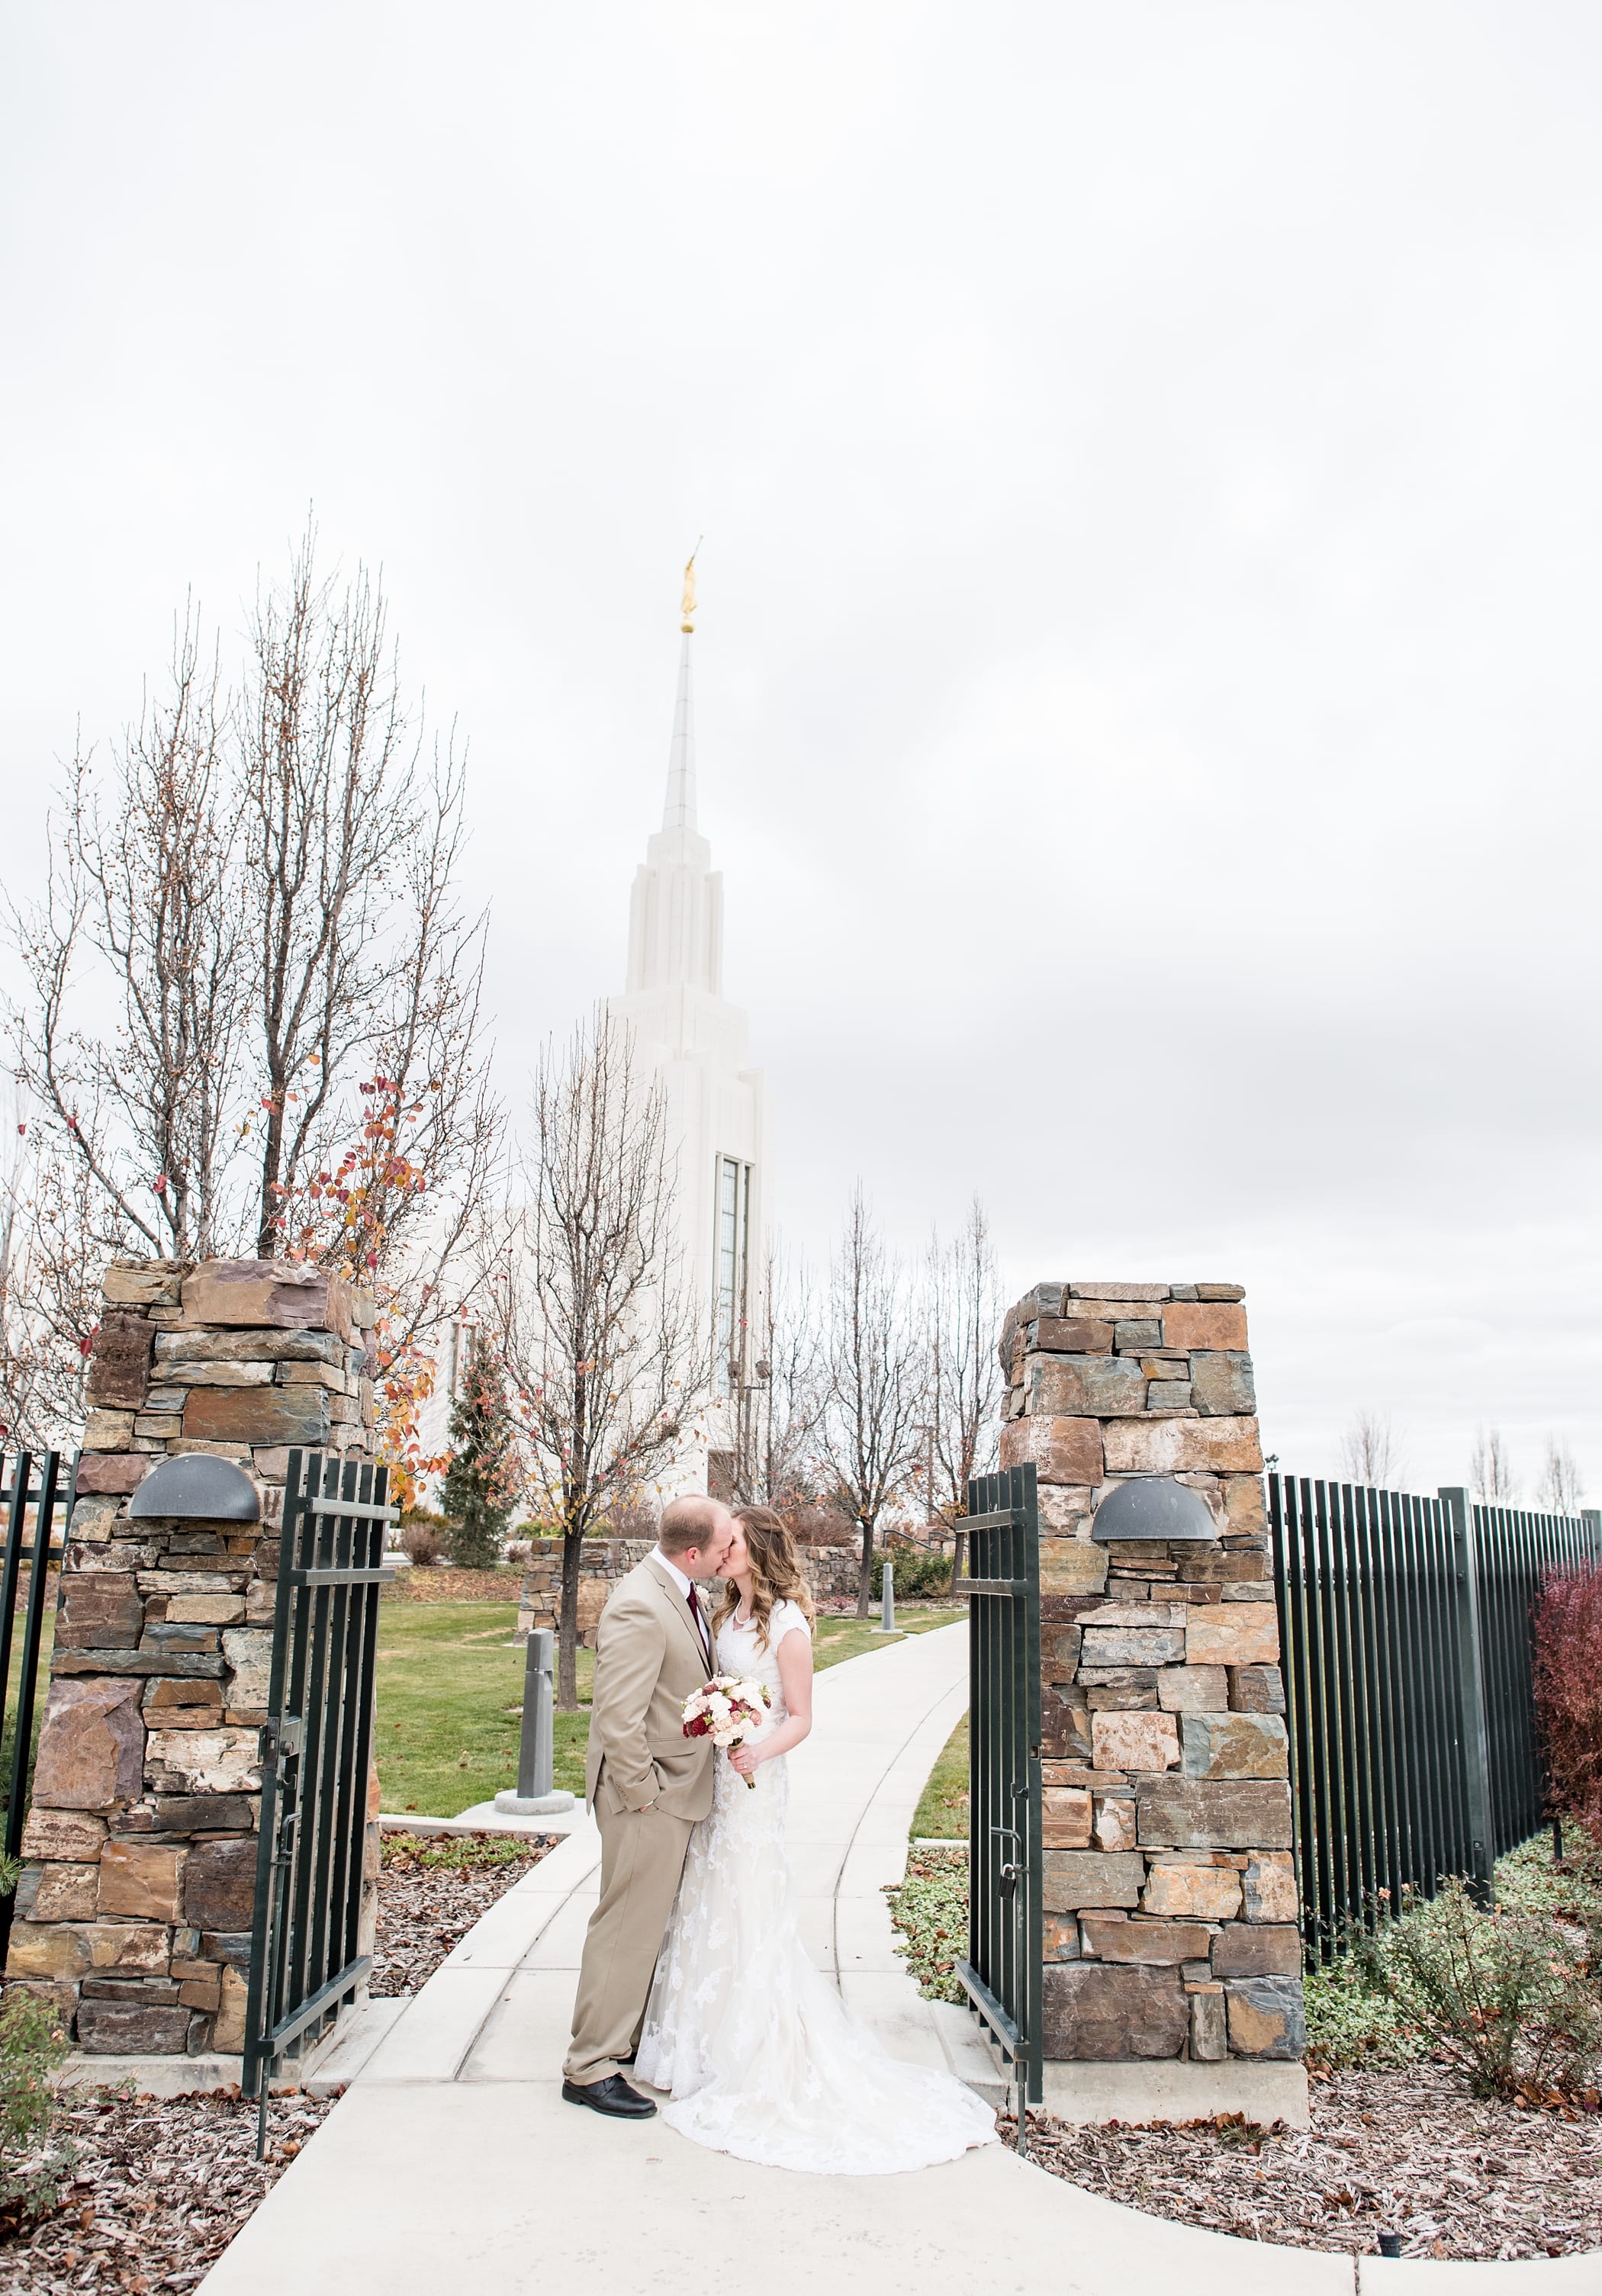 Twin Falls Idaho LDS Wedding Photographer- Michelle & Logan